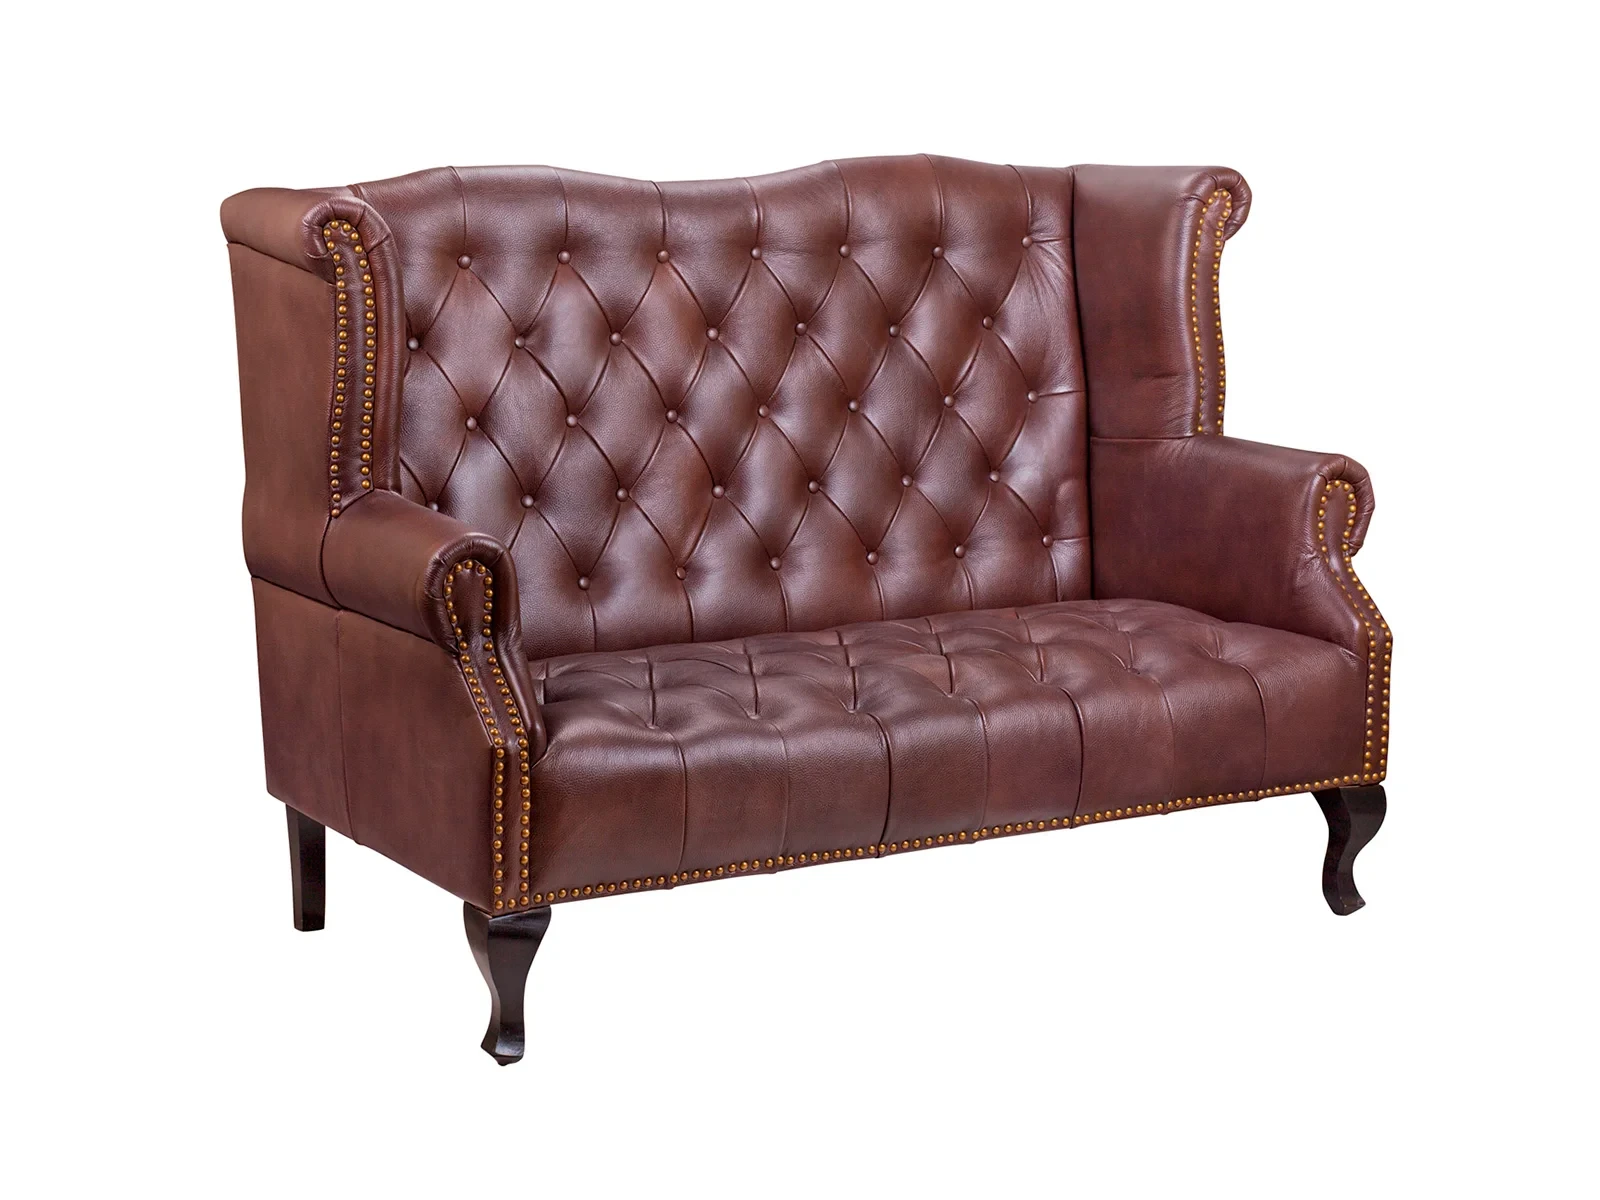 Диван Royal sofa brown 624962  - фото 2